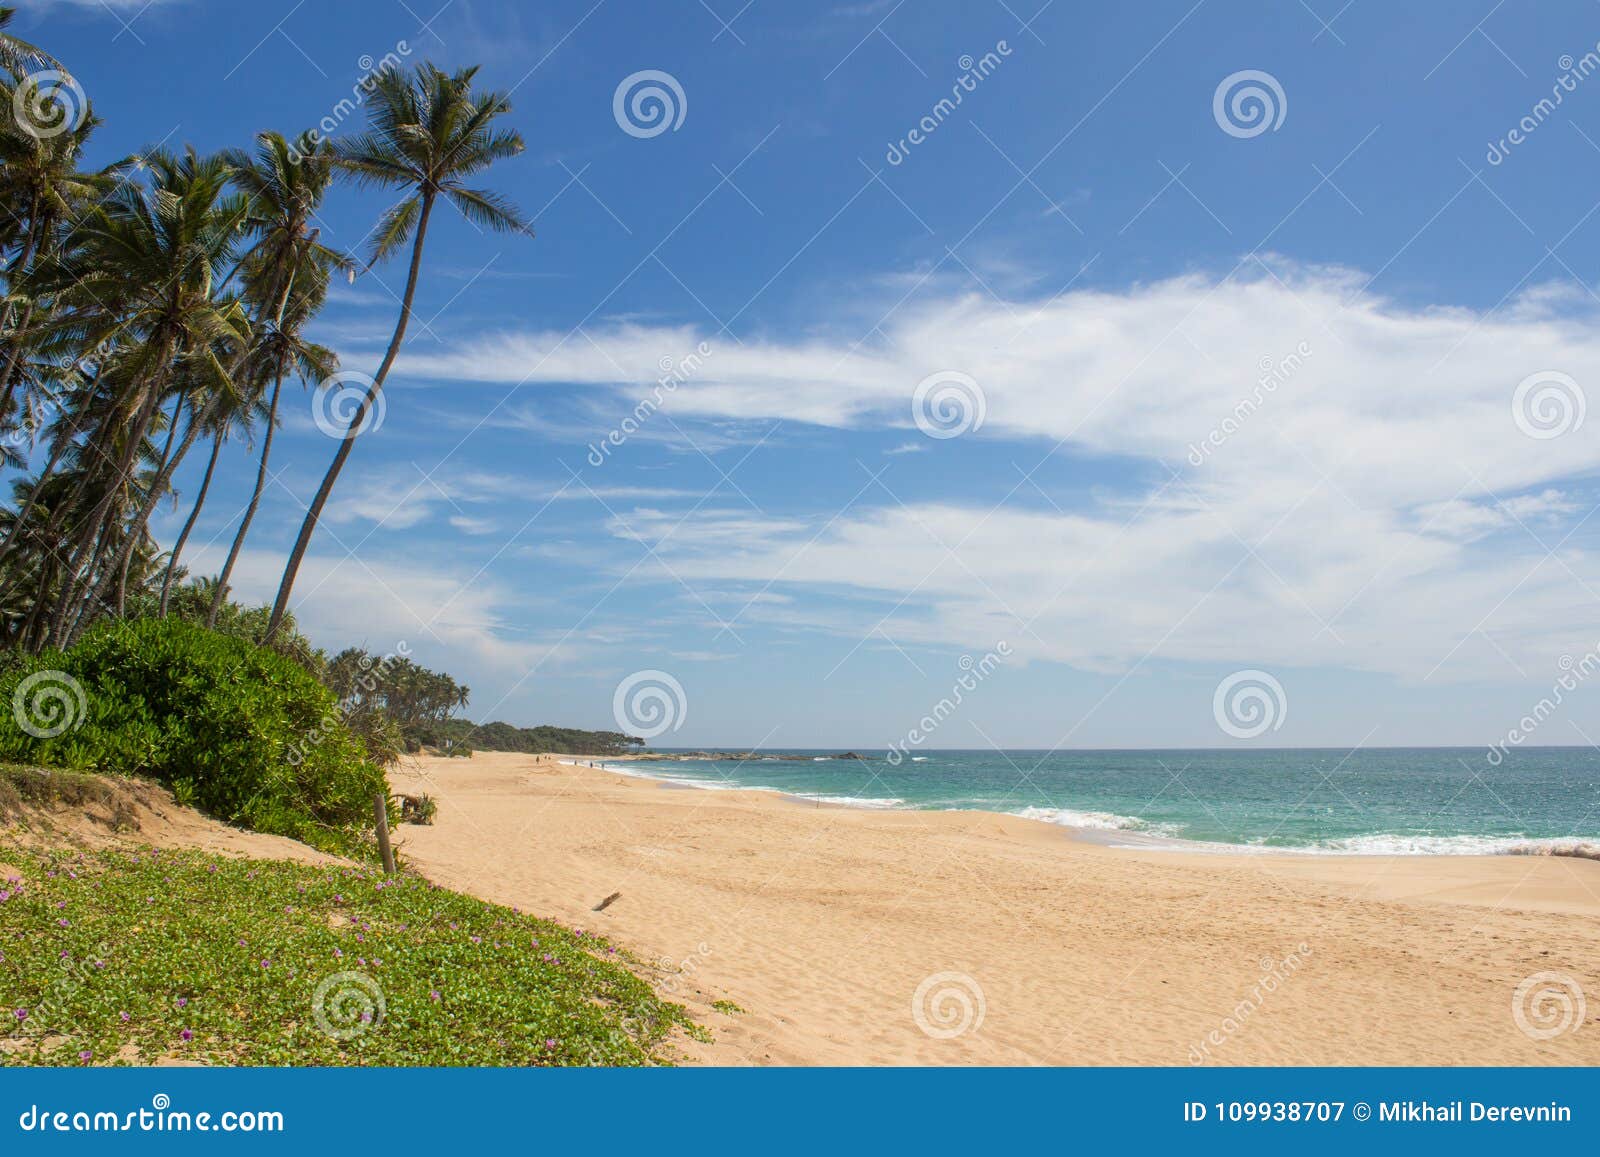 beautiful beach. view of nice tropical beach with palms around.